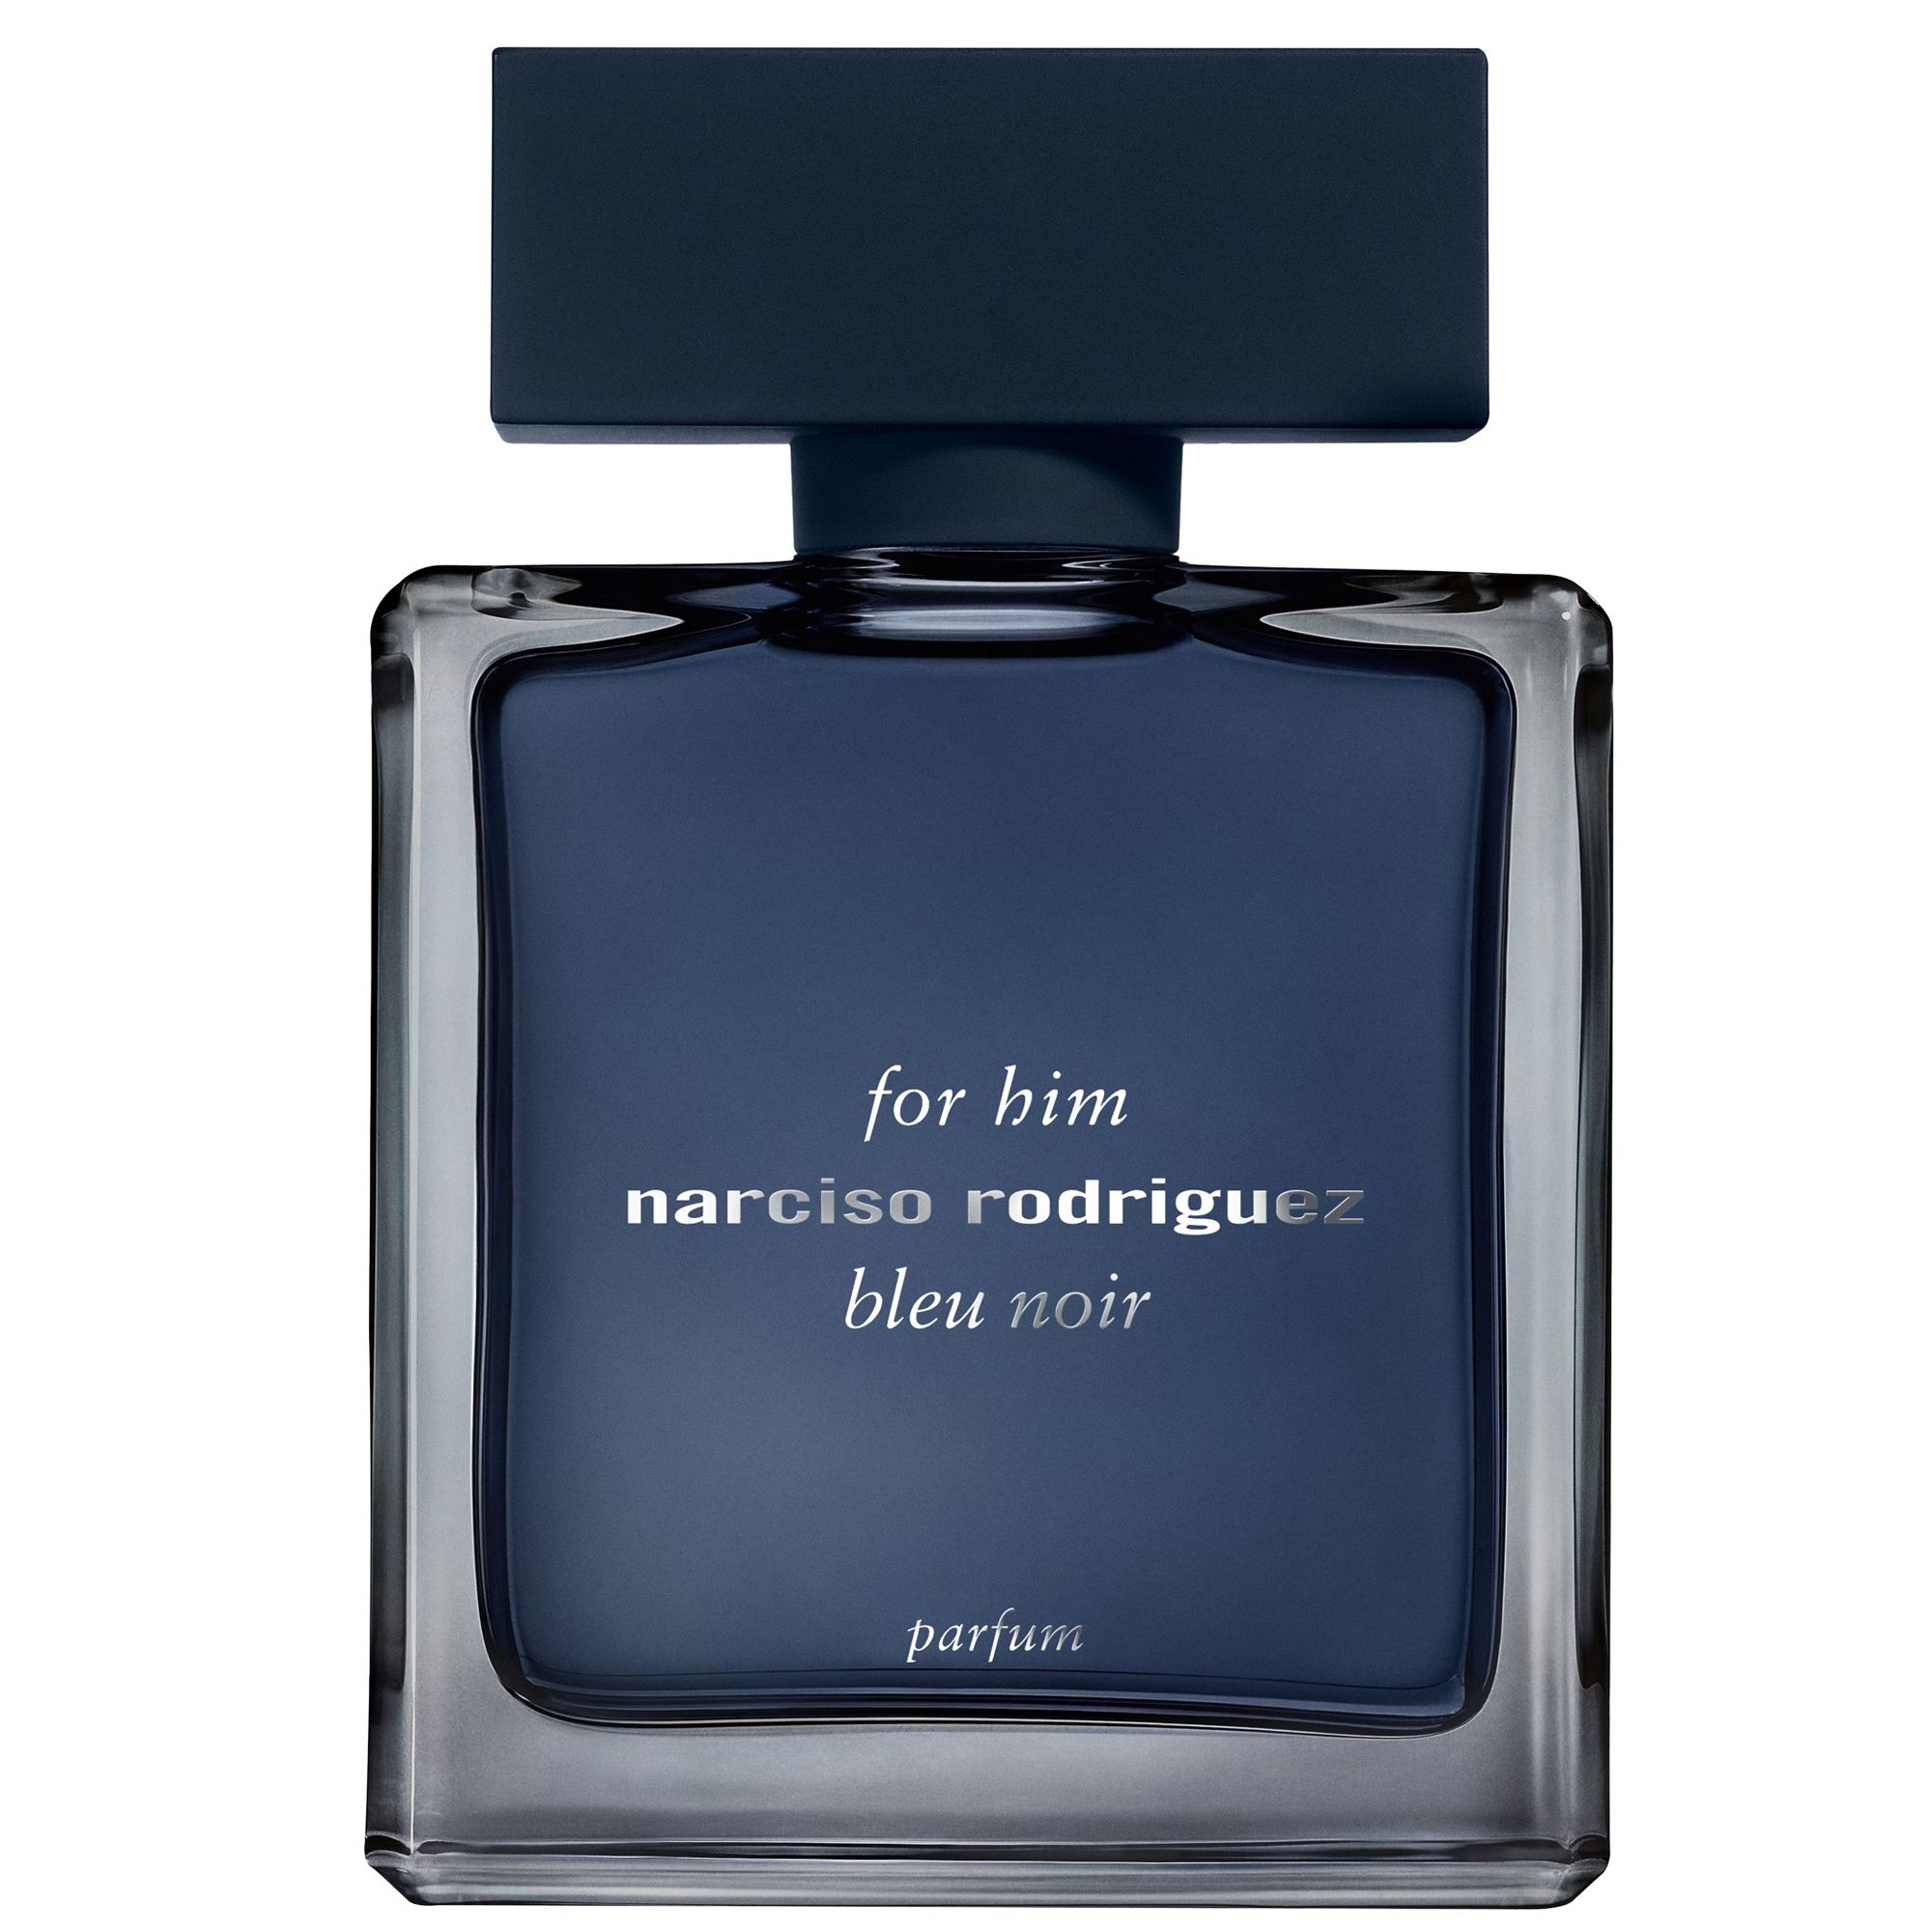 Narciso rodriguez for him bleu. Narciso Rodriguez bleu Noir Parfum. Narciso Rodriguez for him bleu Noir Parfum. Туалетная вода Narciso Rodriguez bleu Noir 100 ml. Narciso Rodriguez bleu Noir for him 2018 50.